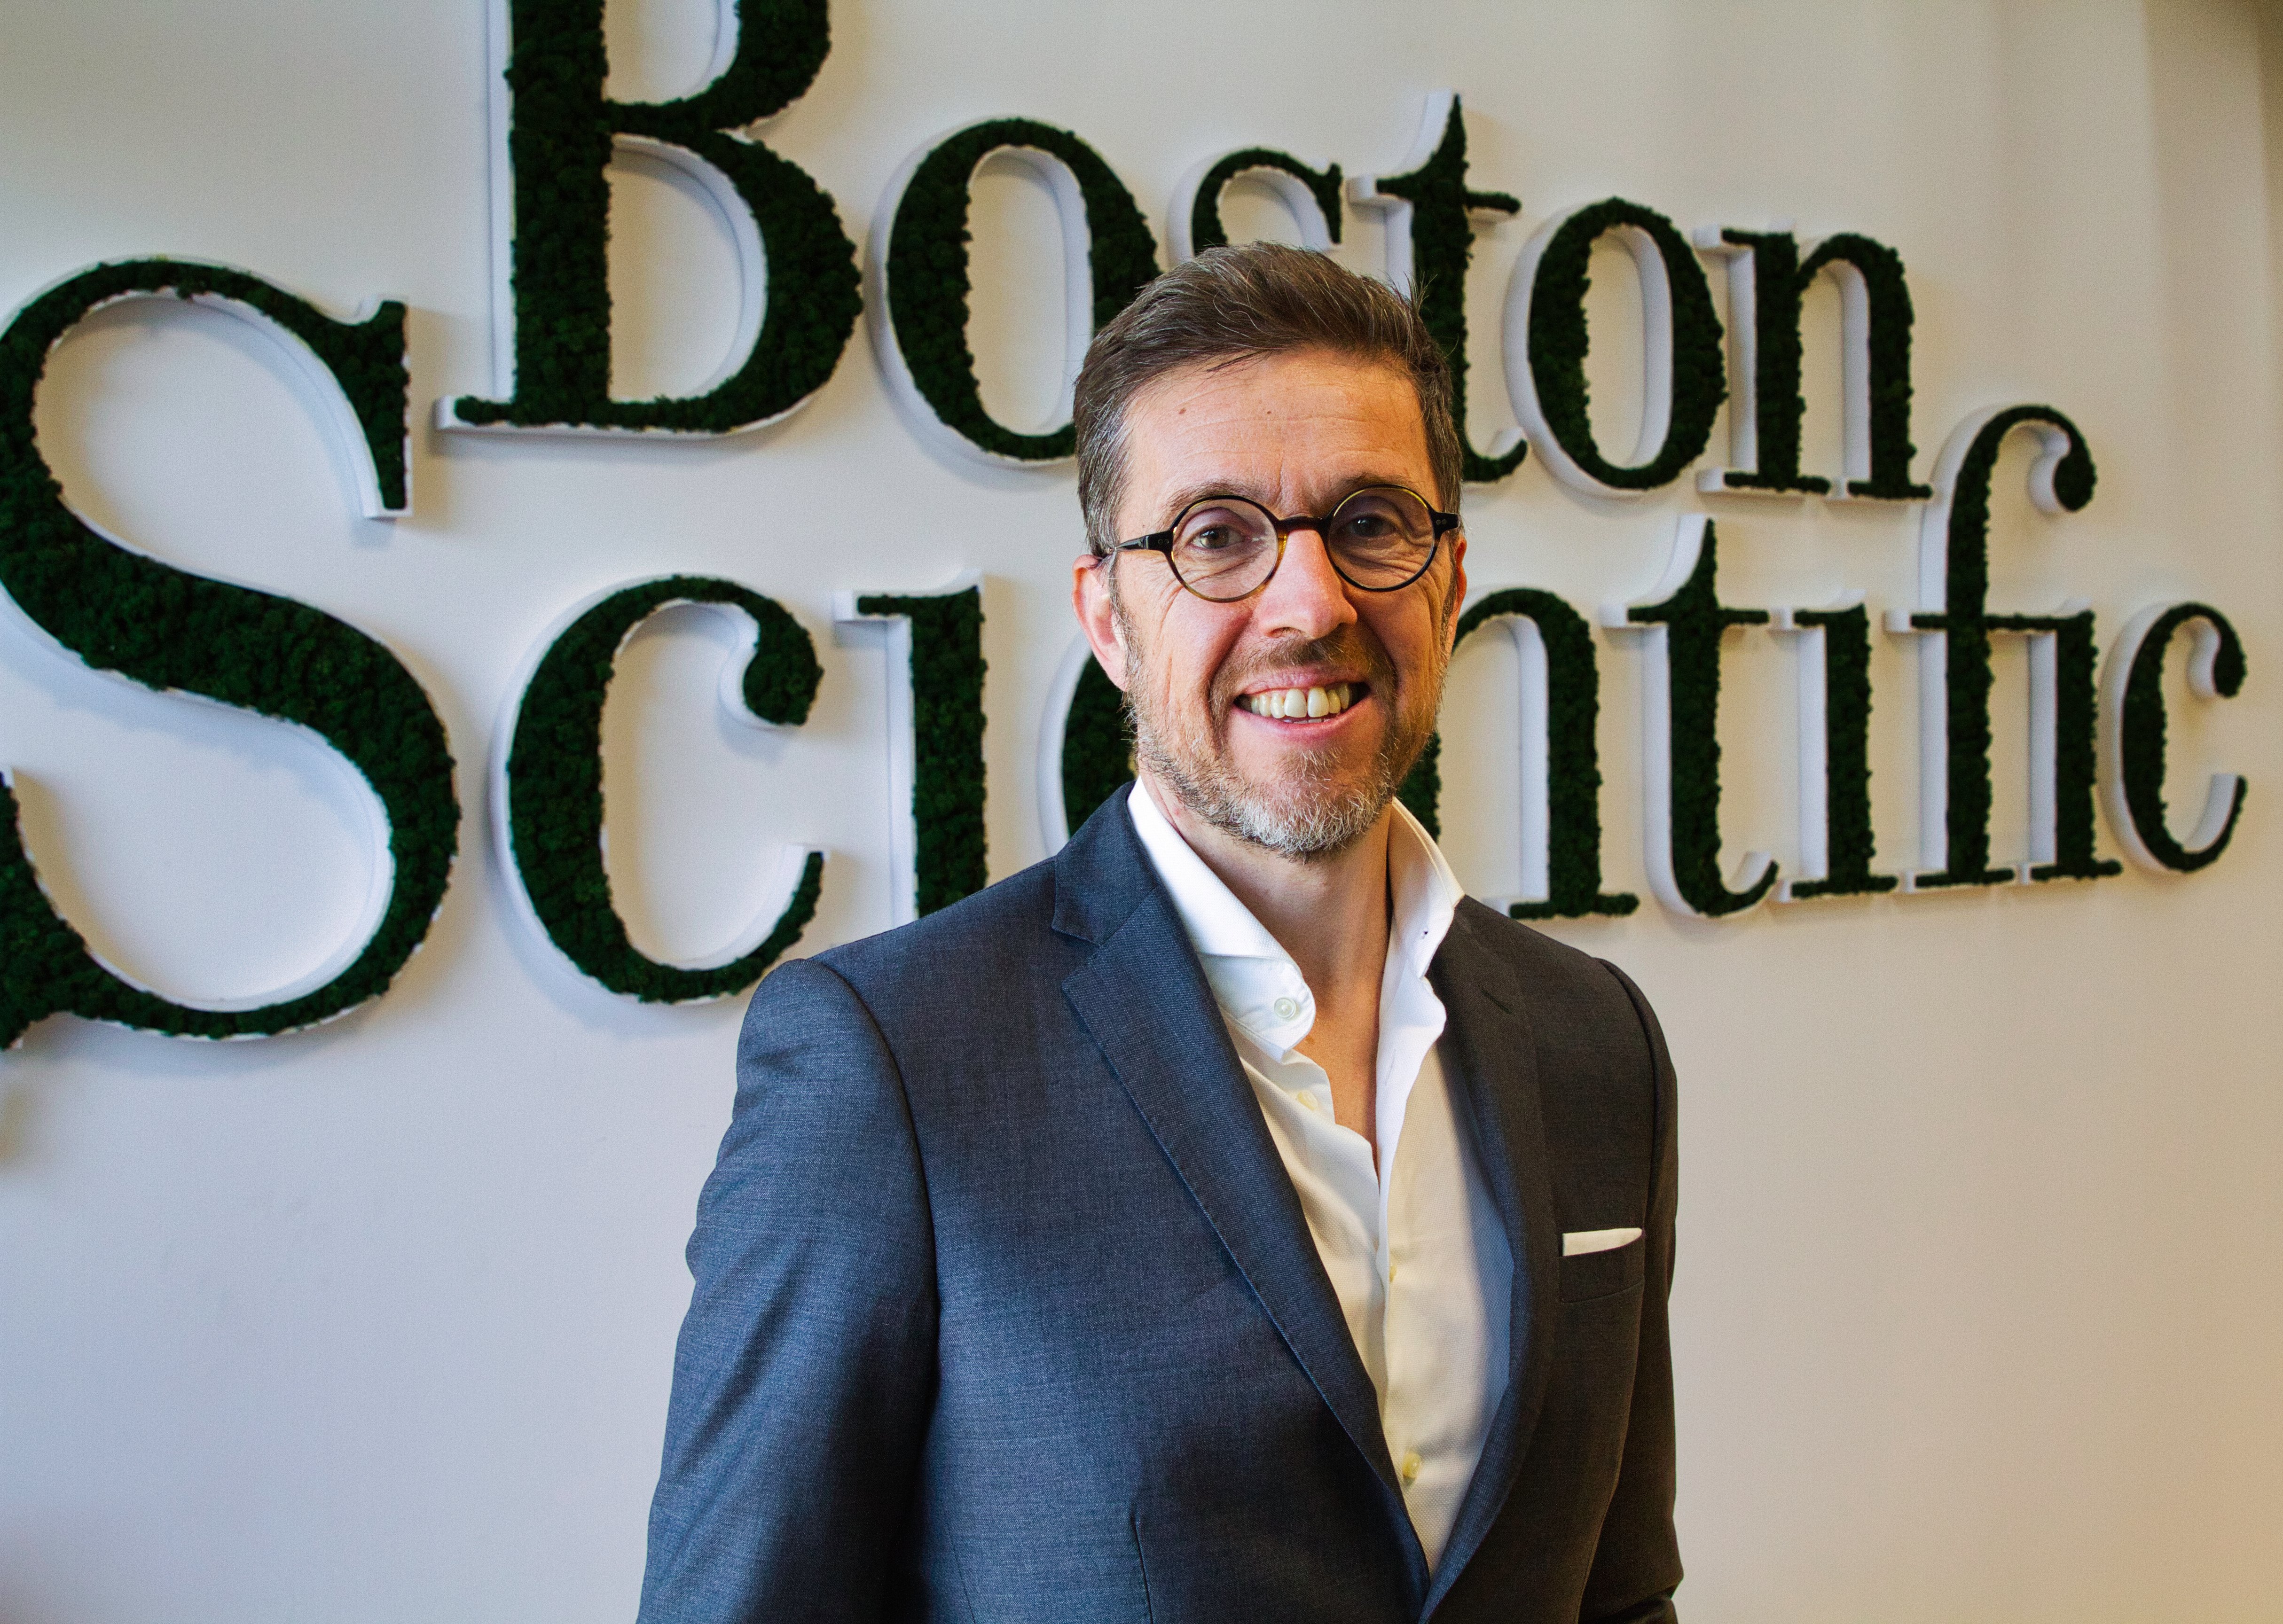 Xavier Bertrand, Vice President Peripheral Interventions for Boston Scientific in EMEA